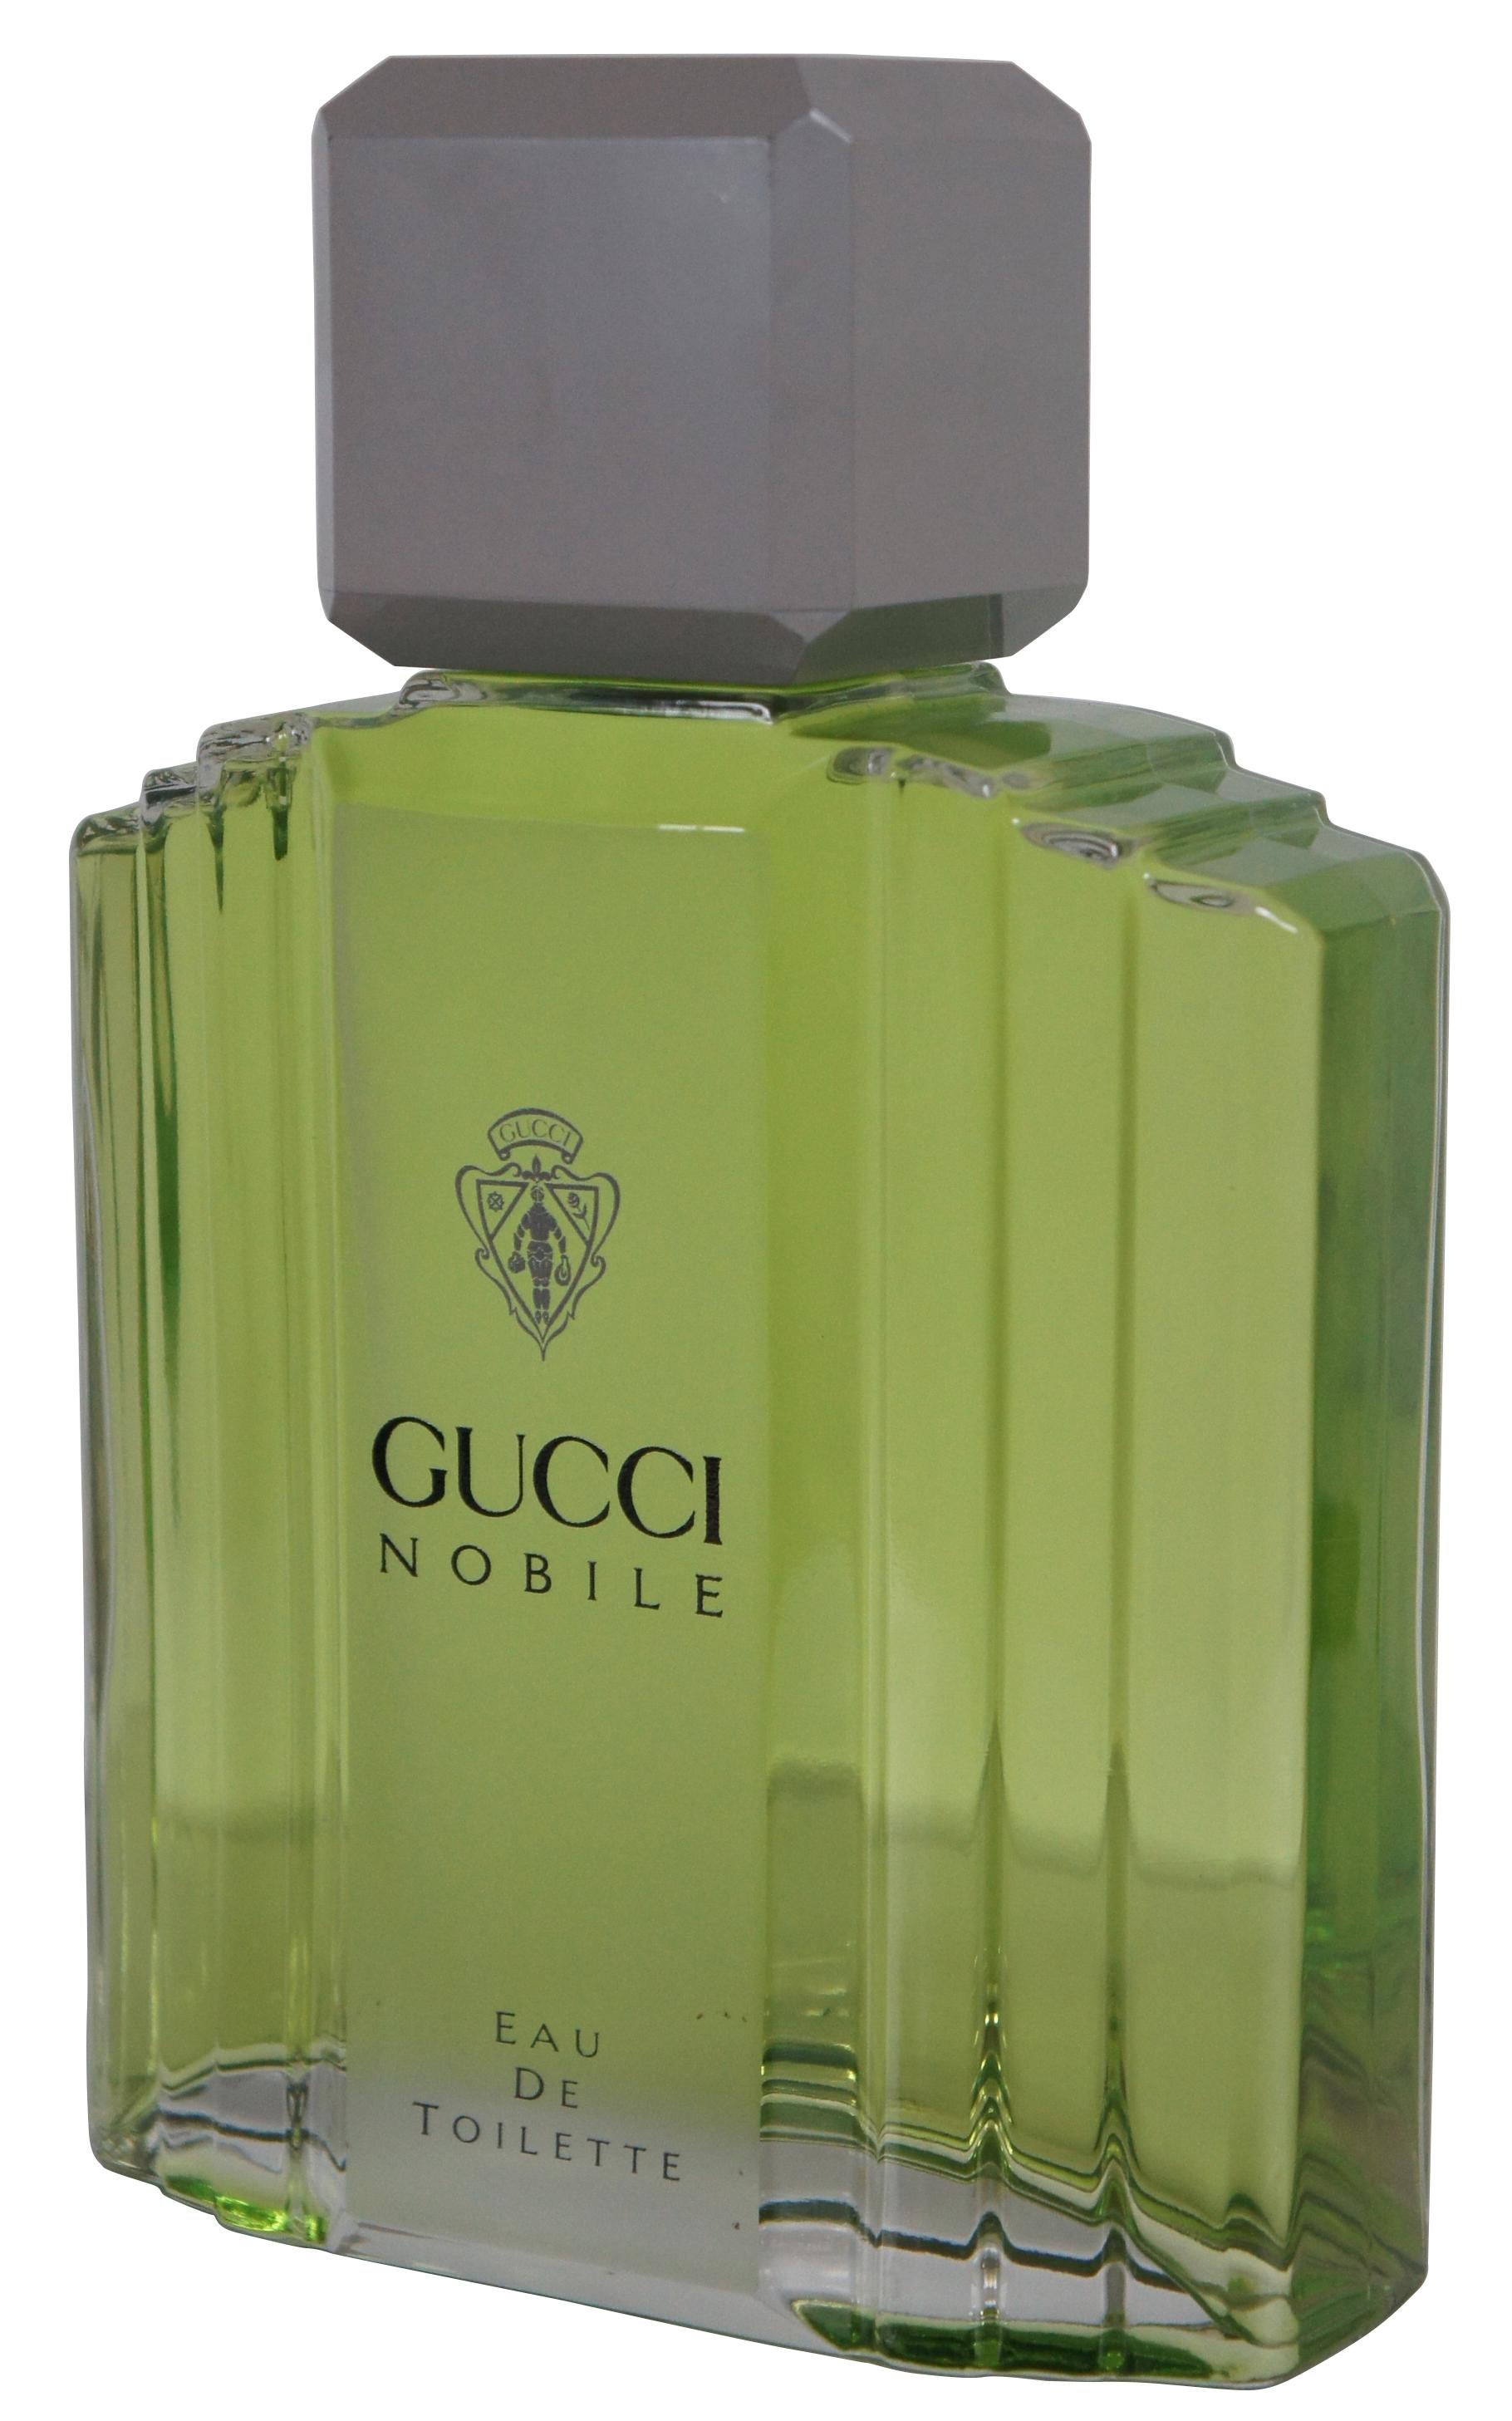 Vintage Gucci Nobile eu de toilette designer fragrance factice or dummy bottle with elegant art deco styling, originally part of a department store display. Measure: 11